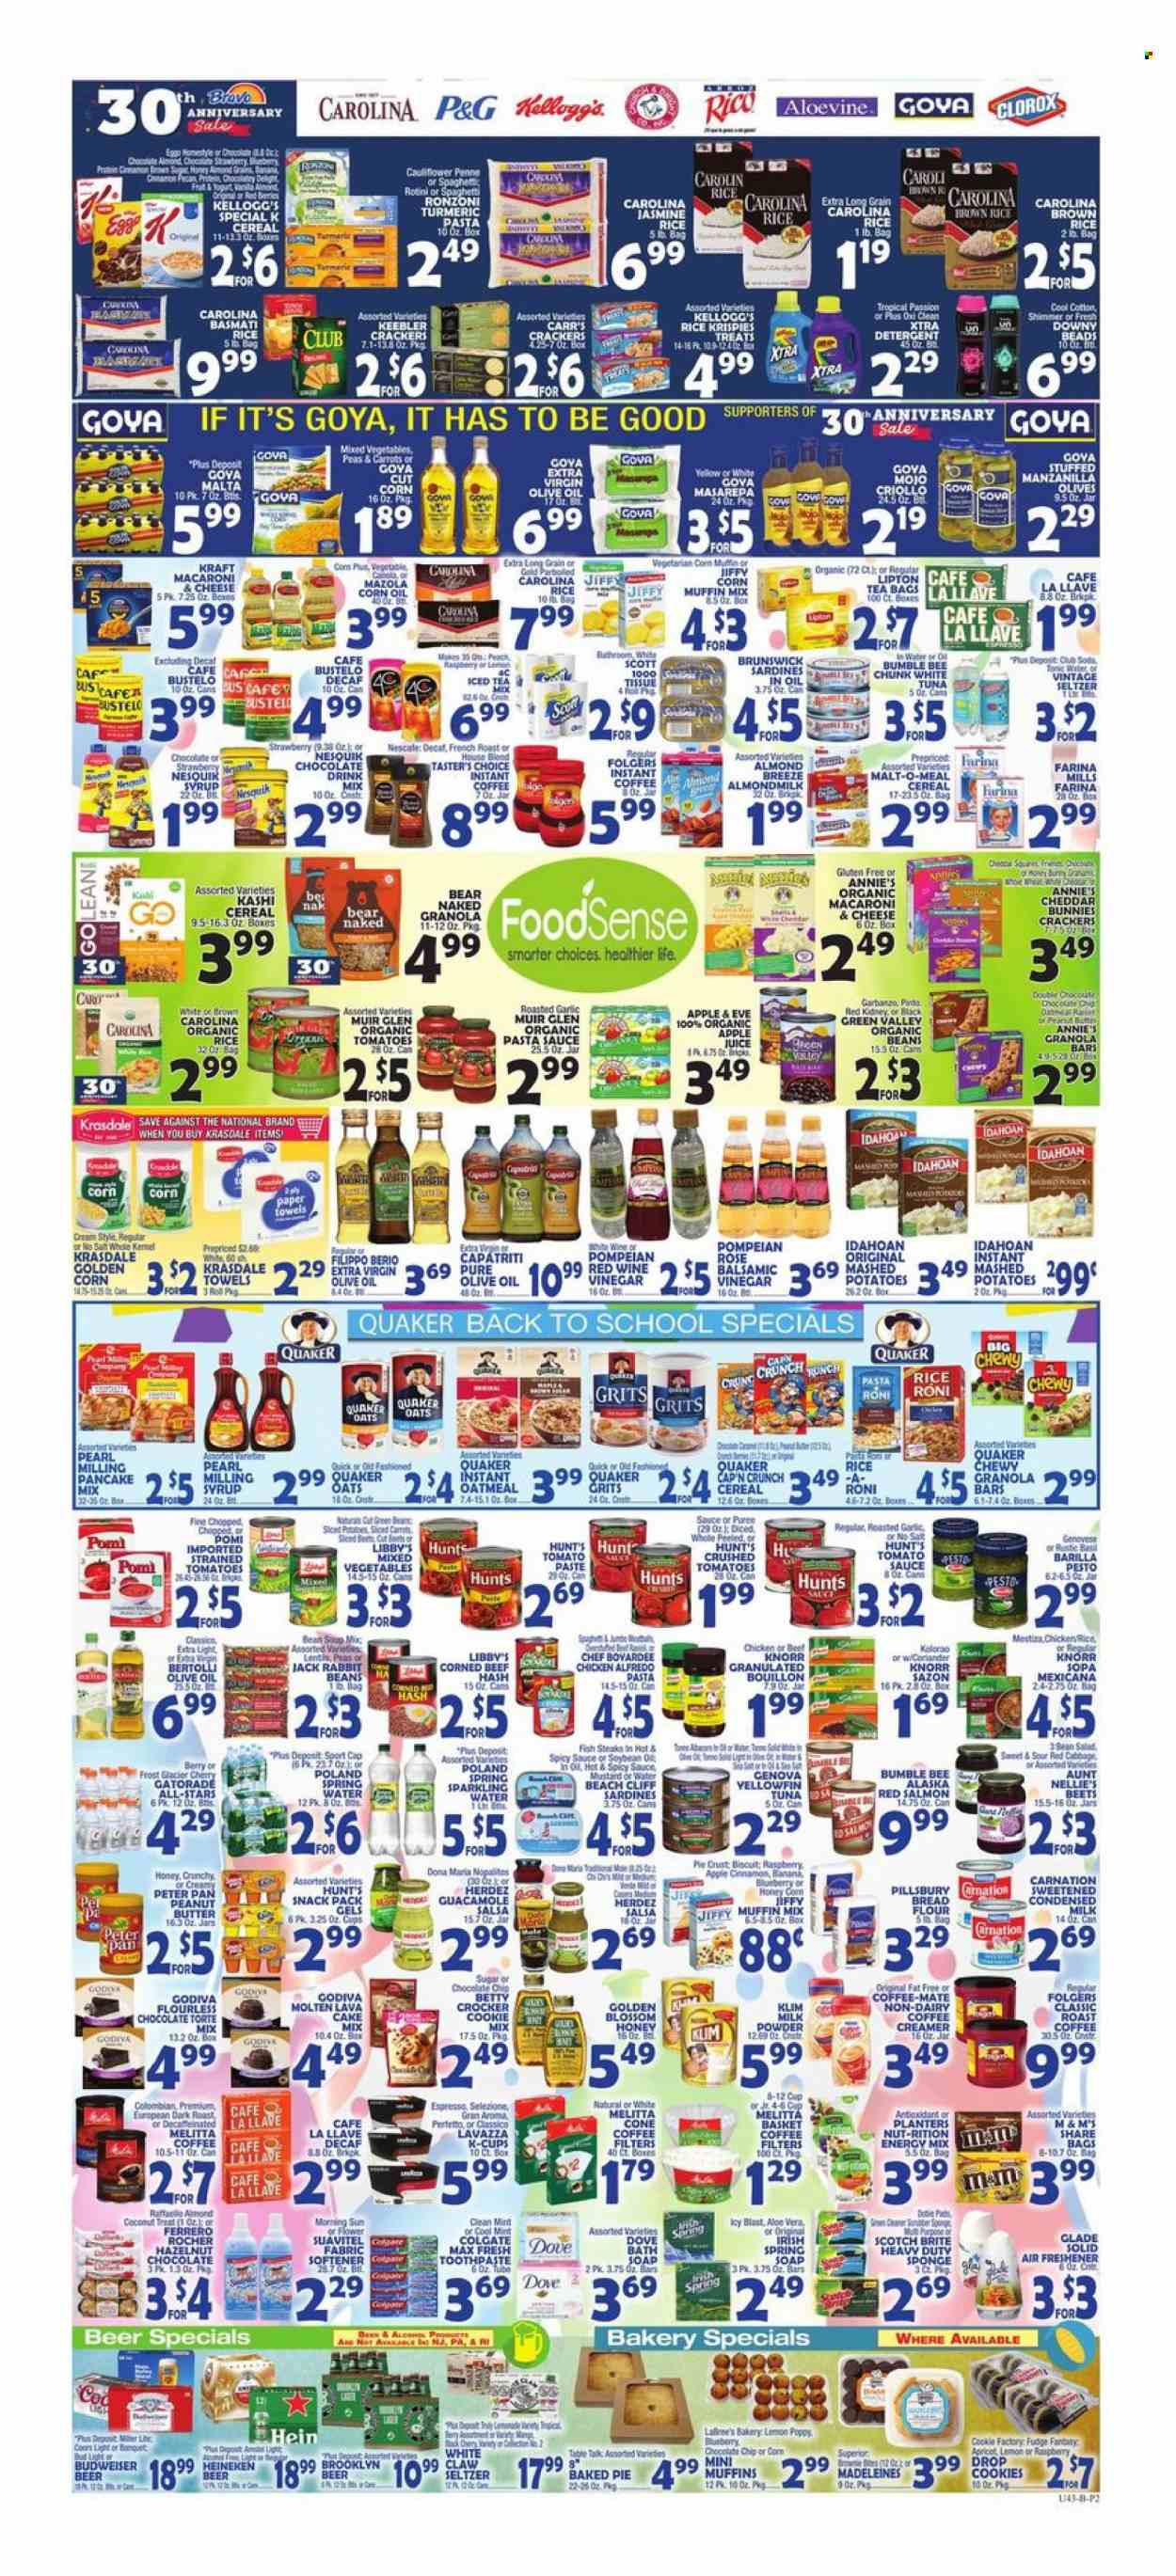 thumbnail - Bravo Supermarkets Flyer - 09/17/2021 - 09/23/2021 - Sales products - bread, pie, cake mix, muffin mix, carrots, garlic, peas, coconut, salmon, sardines, tuna, fish, macaroni & cheese, mashed potatoes, pasta sauce, Bumble Bee, Knorr, pancakes, Pillsbury, Barilla, Quaker, Annie's, Kraft®, Bertolli, guacamole, corned beef, Nesquik, Coffee-Mate, milk, condensed milk, milk powder, Almond Breeze, Blossom, creamer, mixed vegetables, fudge, rabbit, chocolate, Ferrero Rocher, Godiva, crackers, Kellogg's, Keebler, bread flour, flour, sugar, oatmeal, oats, grits, corn muffin, crushed tomatoes, tomato sauce, olives, Goya, cereals, granola bar, Rice Krispies, basmati rice, brown rice, penne, long grain rice, turmeric, pesto, salsa, balsamic vinegar, corn oil, extra virgin olive oil, vinegar, wine vinegar, olive oil, honey, peanut butter, Planters, apple juice, juice, Gatorade, seltzer water, spring water, sparkling water, chocolate drink, tea bags, instant coffee, Folgers, coffee capsules, K-Cups, Lavazza, rosé wine, beer, Heineken, beef meat, Dove, Scott, tissues, kitchen towels, paper towels, detergent, Clorox, XTRA, soap, Colgate, Burberry, Budweiser. Page 2.